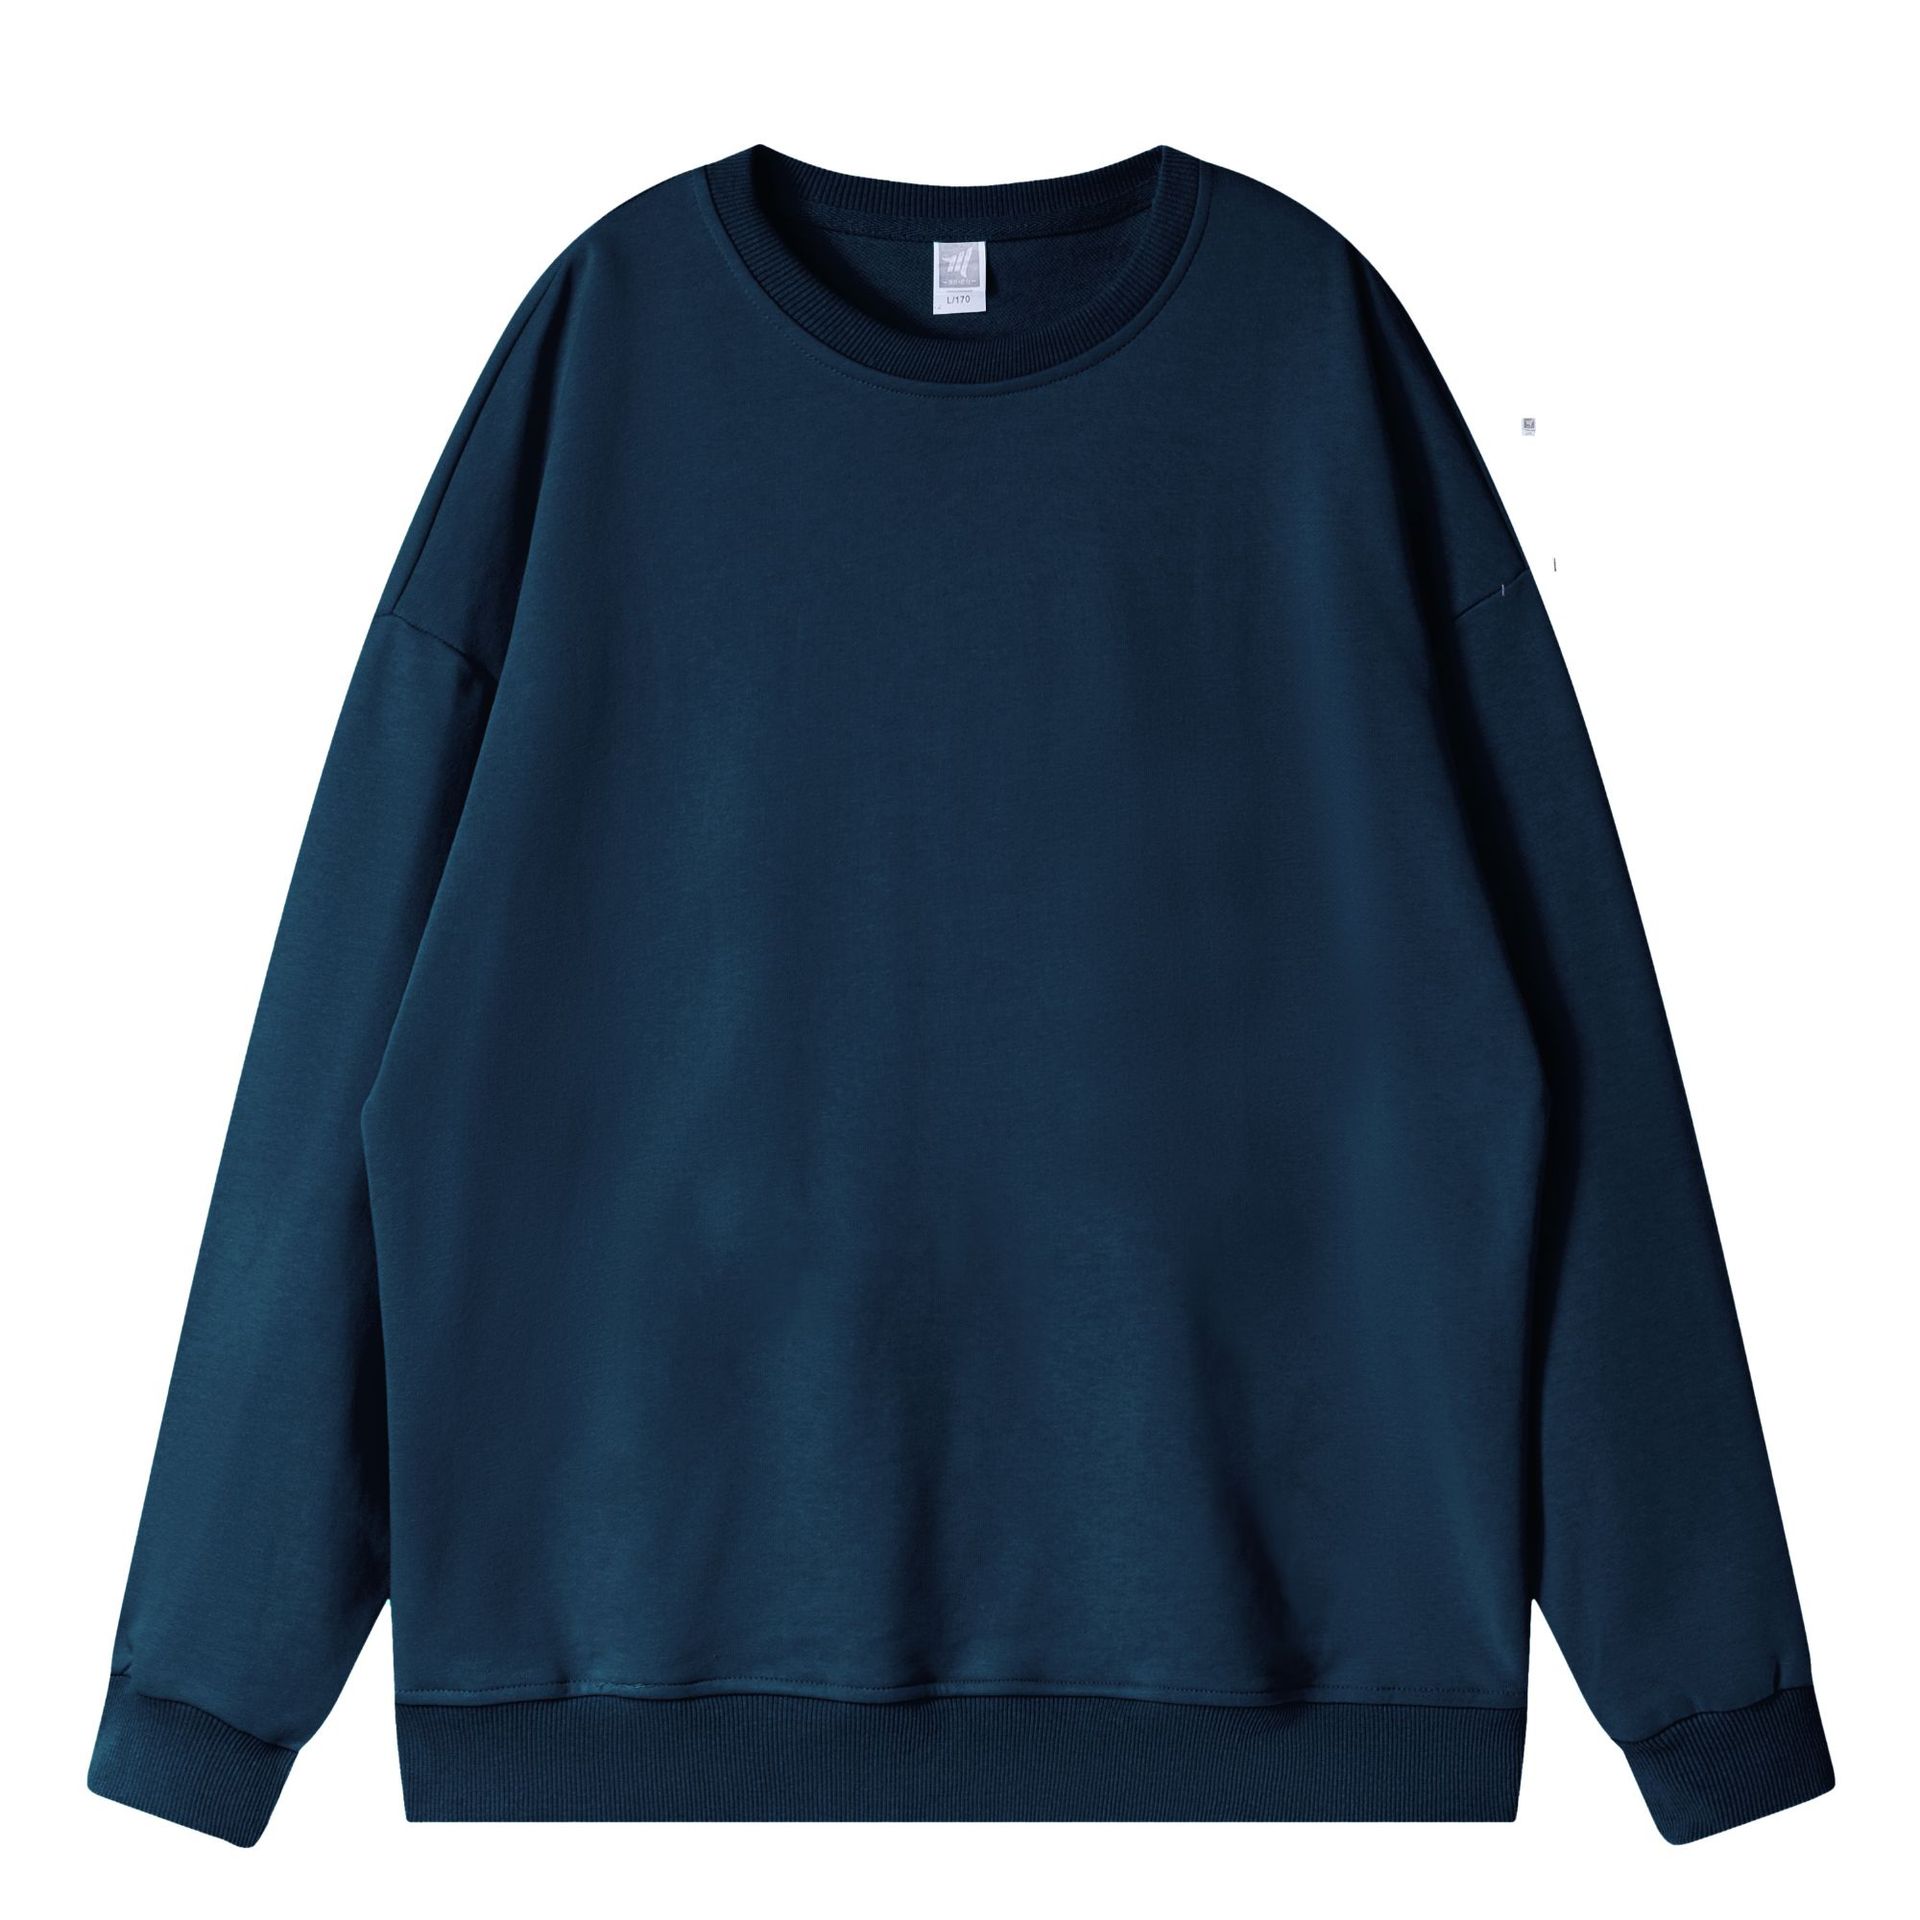 Wholesale custom logo men tracksuits jumper unisex 100% cotton crew neck blank fleece or french terry hoodies sweatshirts